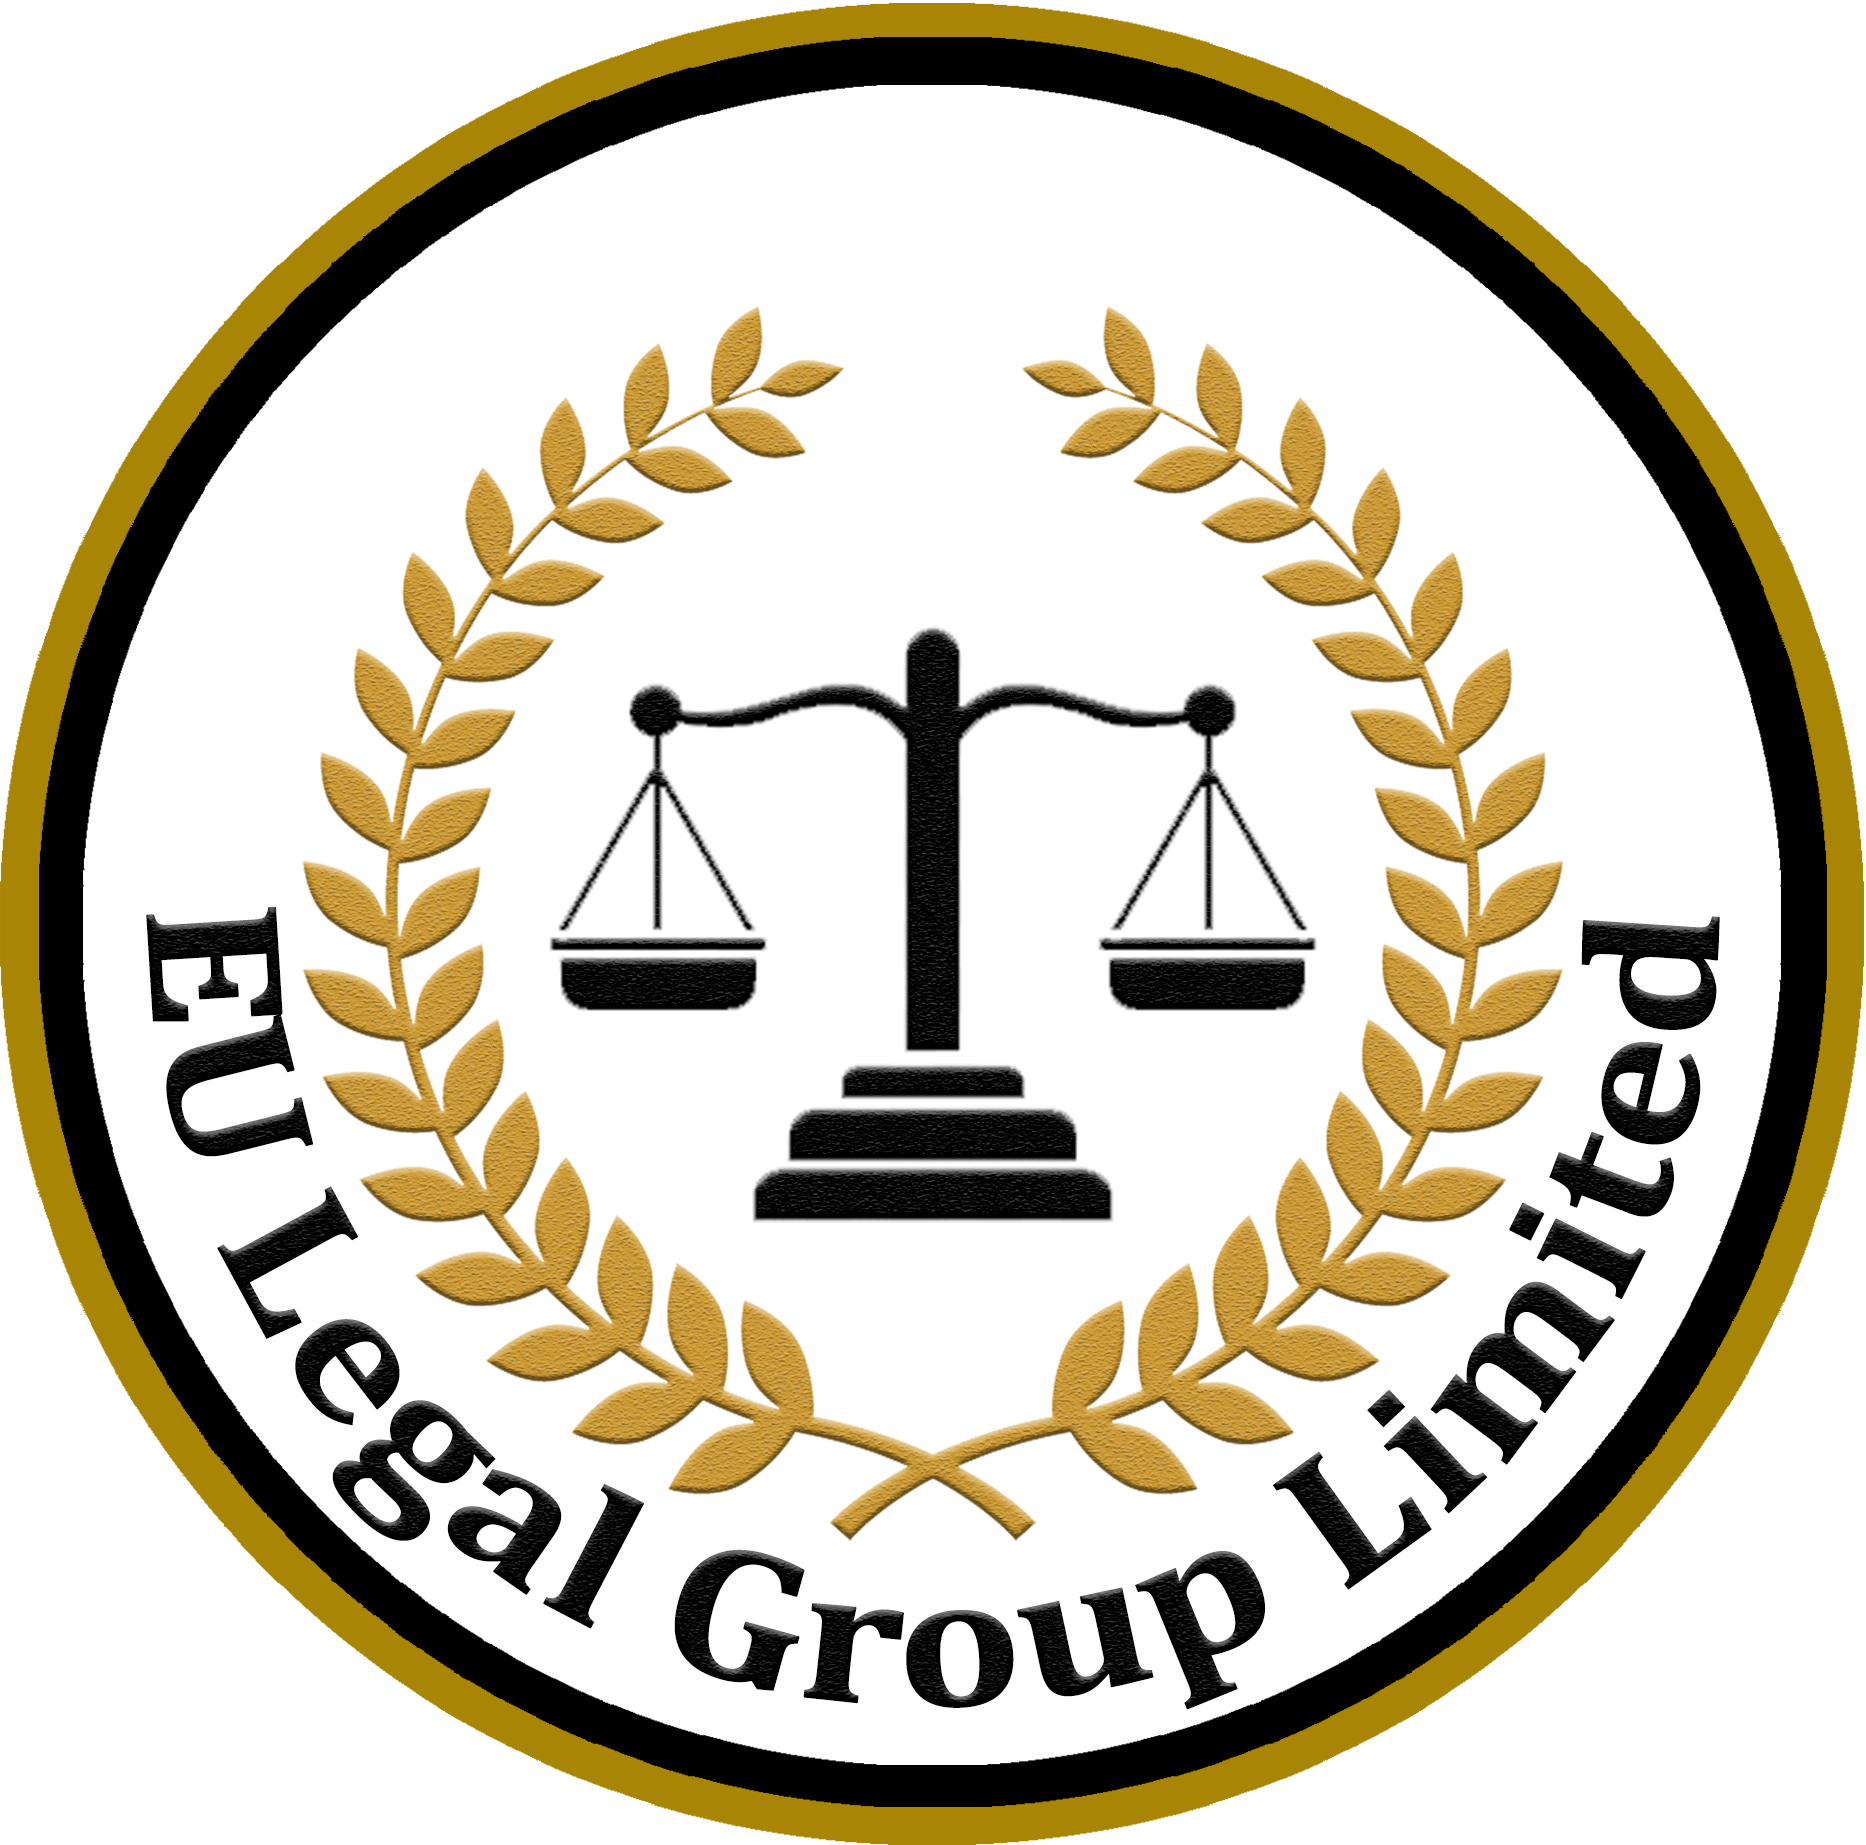 EU Legal Group Limited.